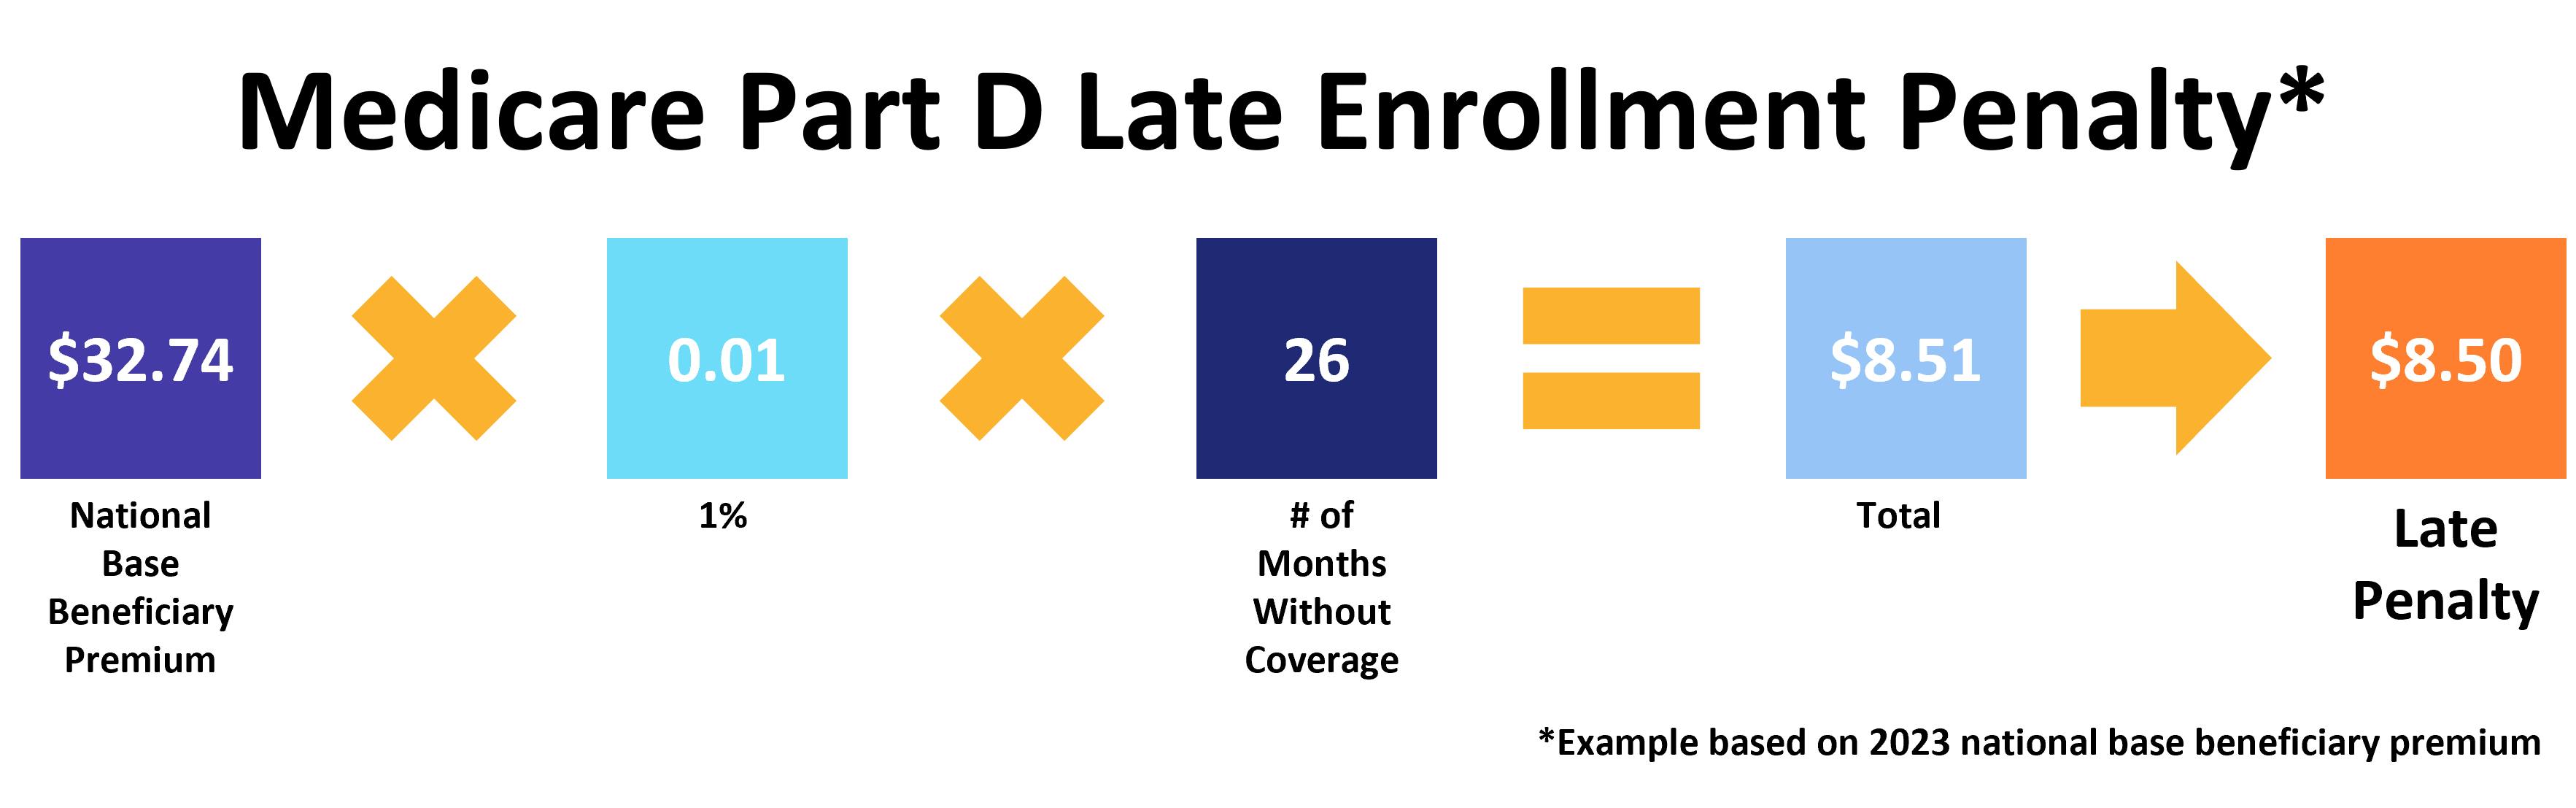 Medicare Part D Late Enrollment Penalty